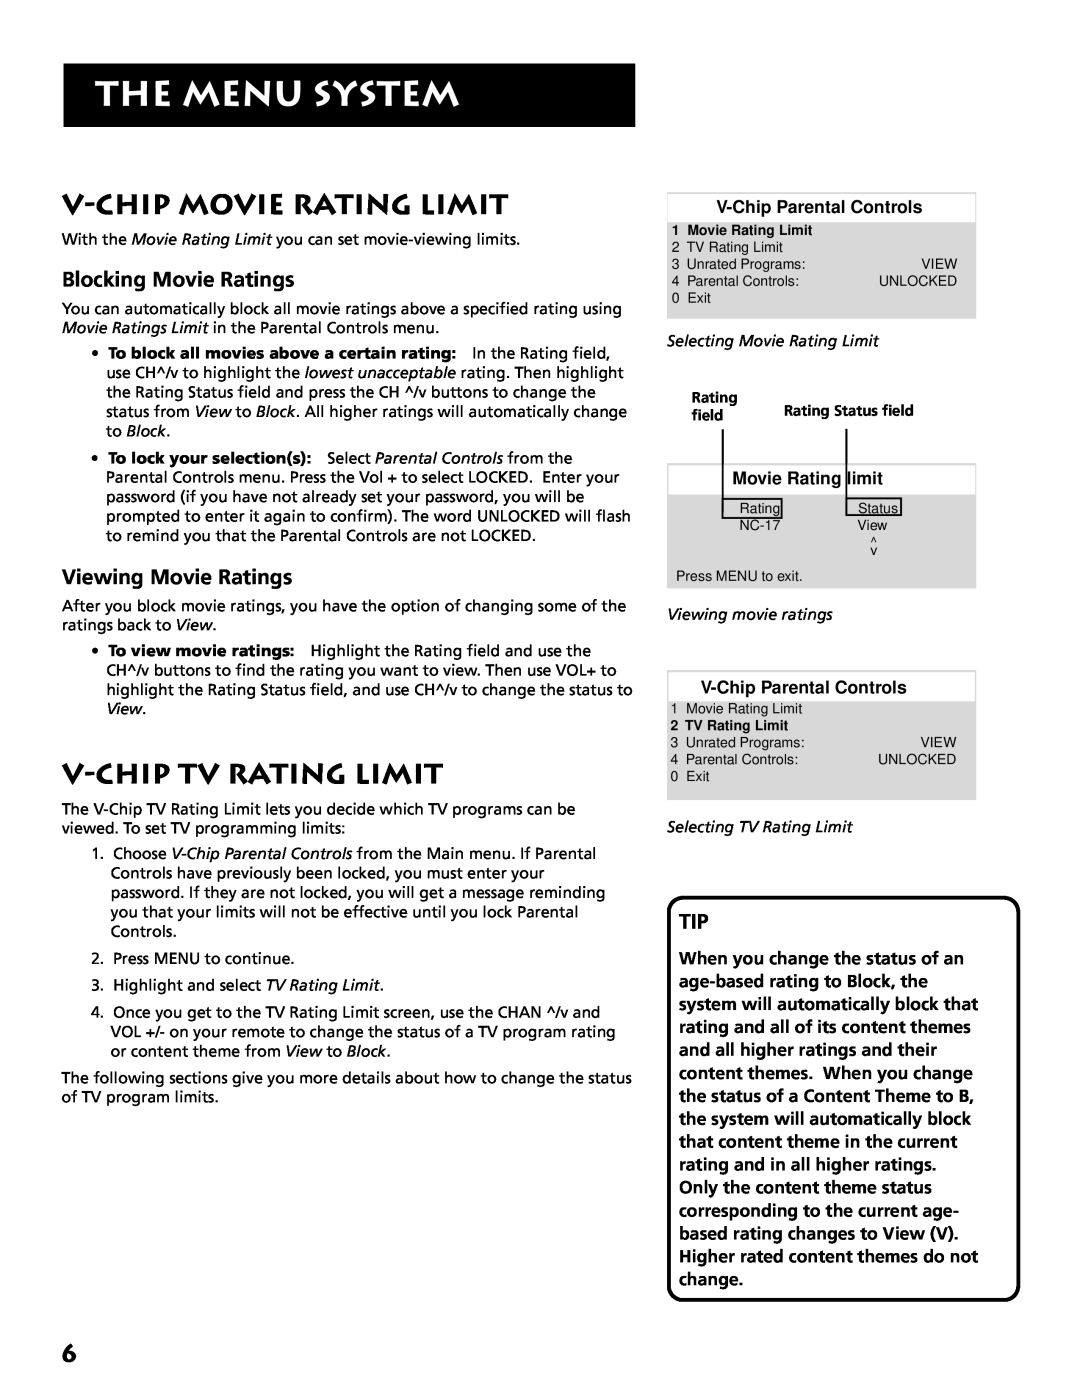 RCA E13319 manual V-Chip Movie Rating Limit, V-Chip Tv Rating Limit, Blocking Movie Ratings, Viewing Movie Ratings 